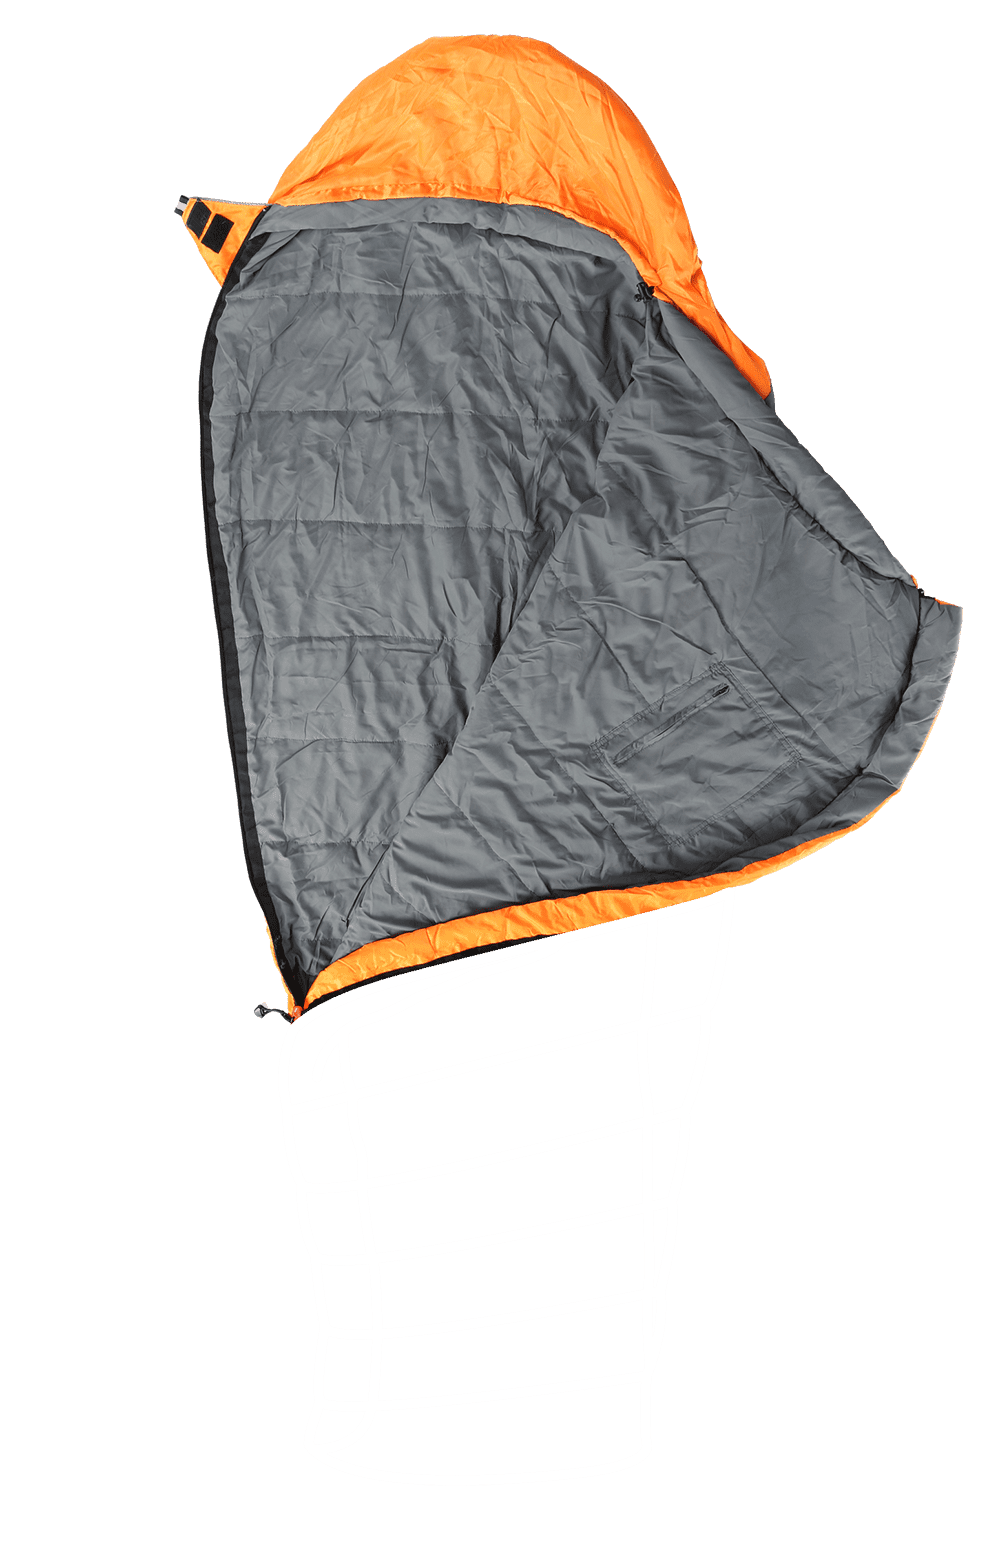 sleeping bag with cut-away